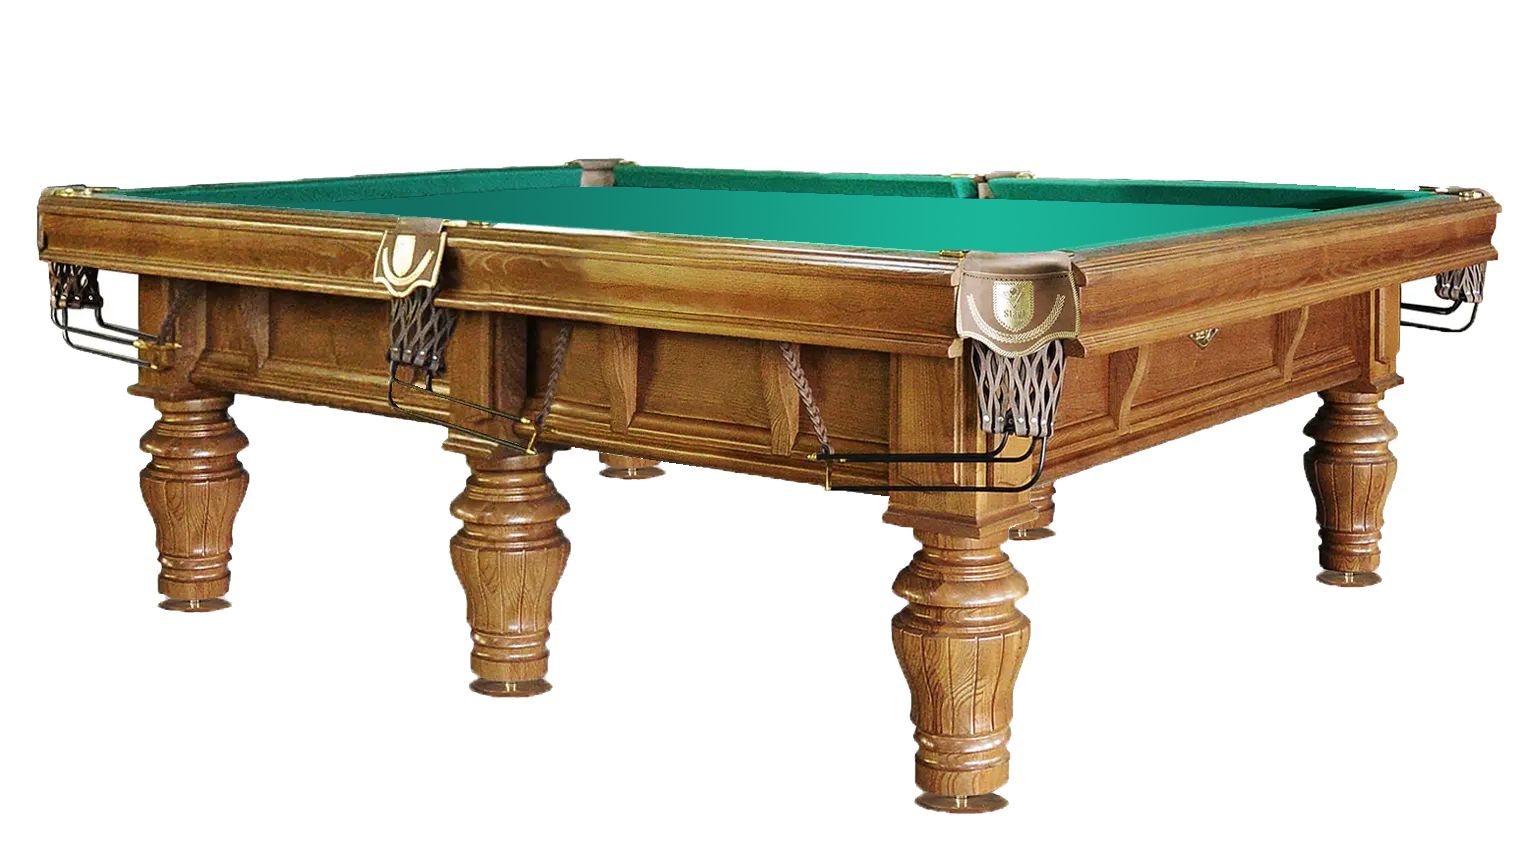 Бильярдный стол спб. Бильярдный стол 4 фута bm003. Бильярдный стол Billiard-Ball 9 футов (пул). Бильярдный стол ”Камелот” пул.